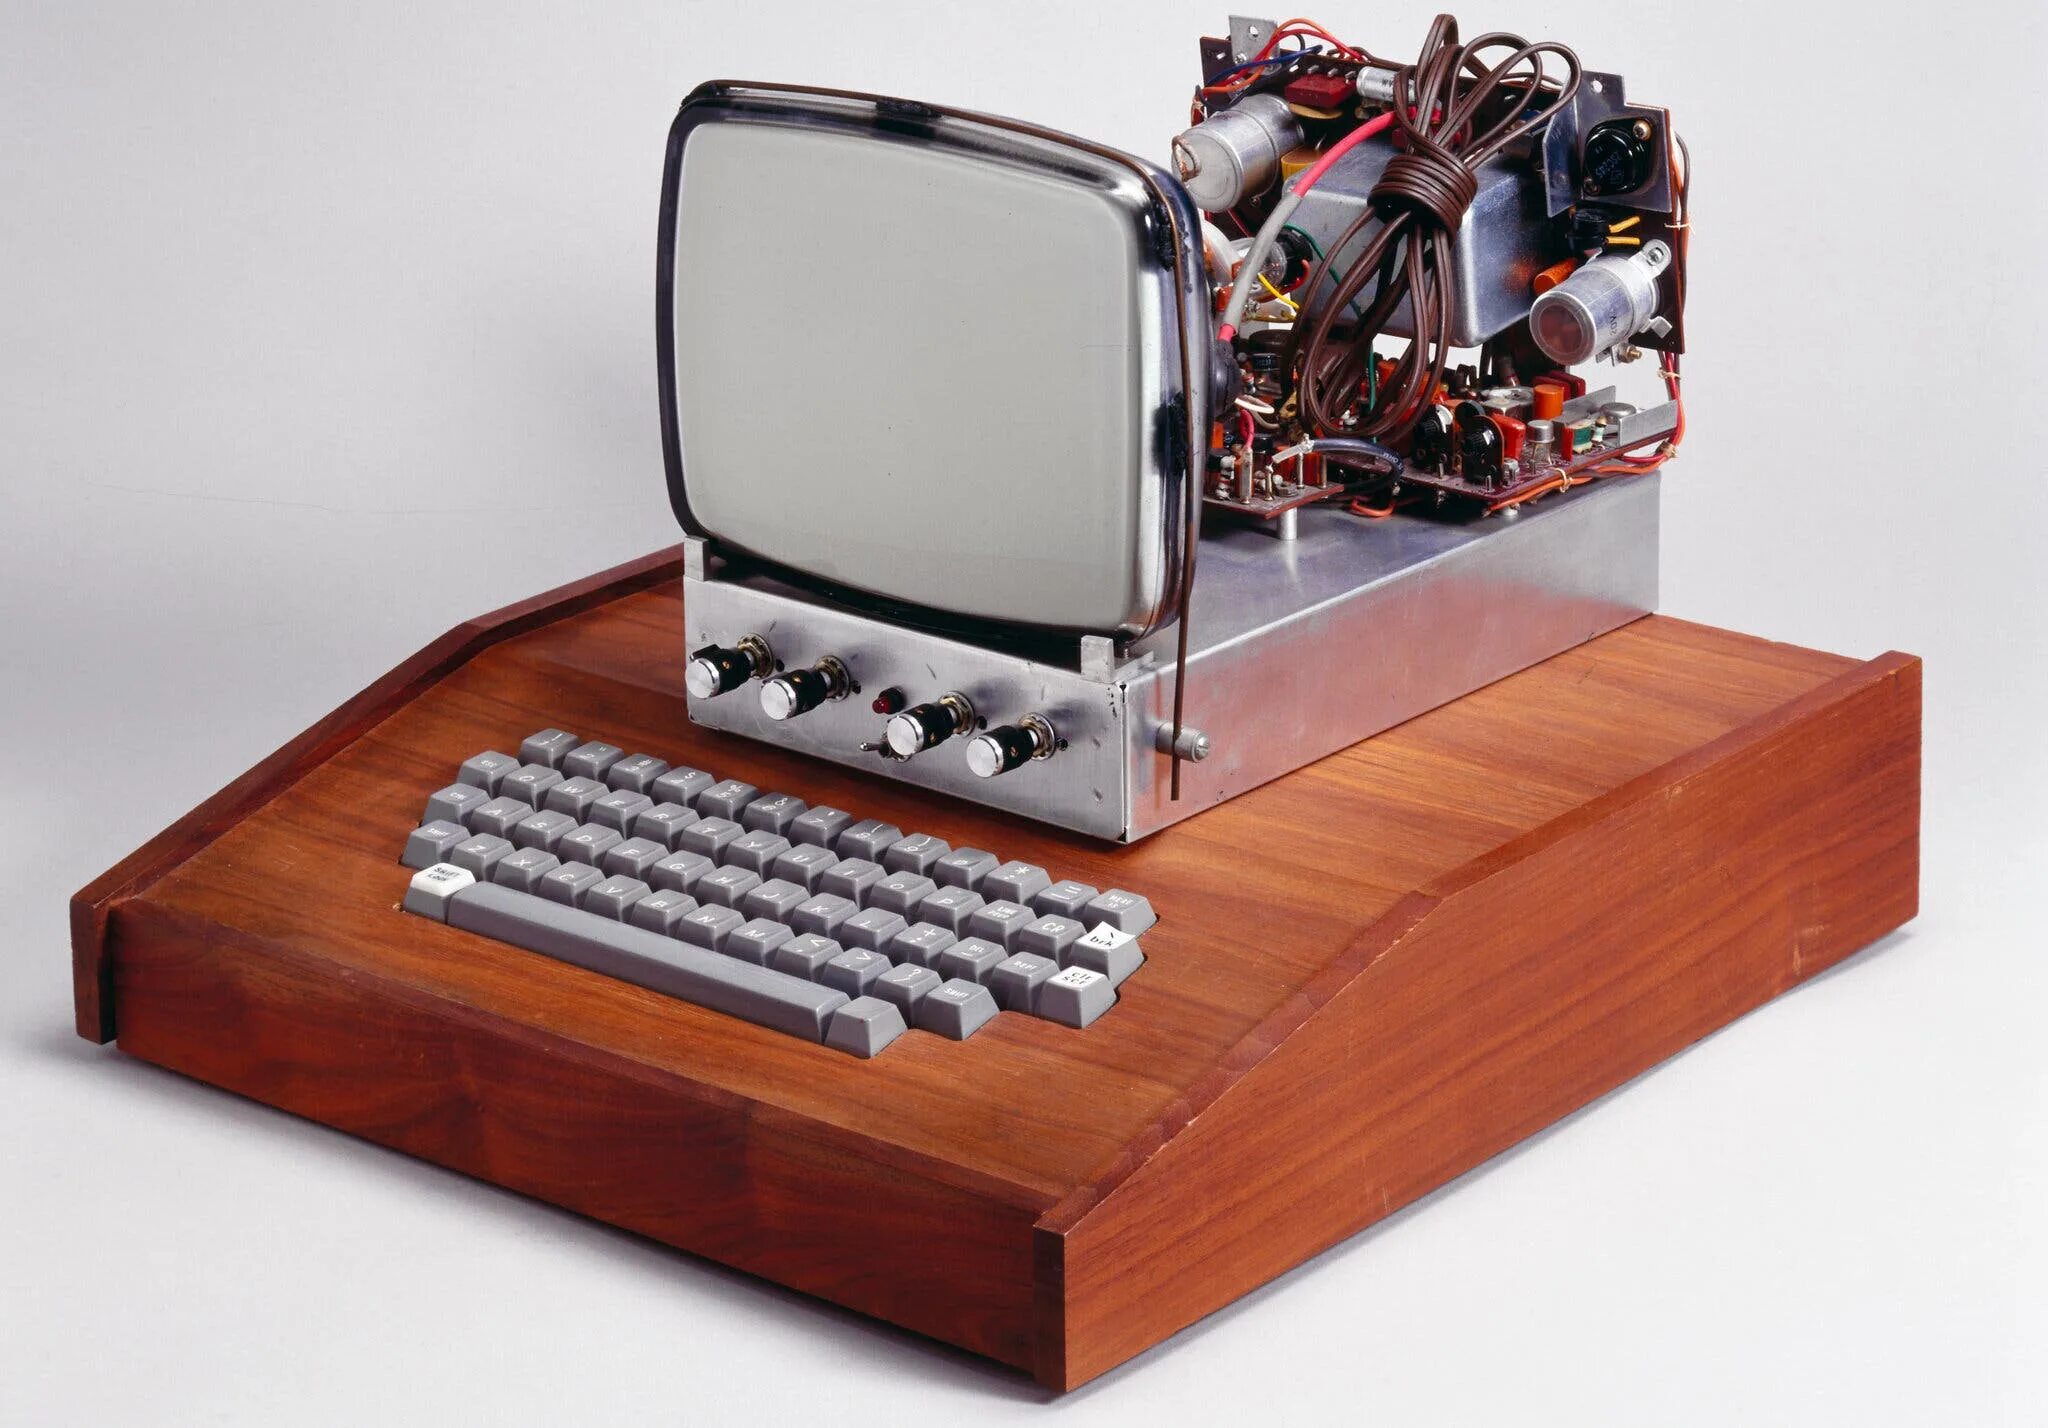 New apple 1. Компьютер Эппл 1976. Apple 1. Первый компьютер Эппл. Компьютер Apple 1 1976 год.